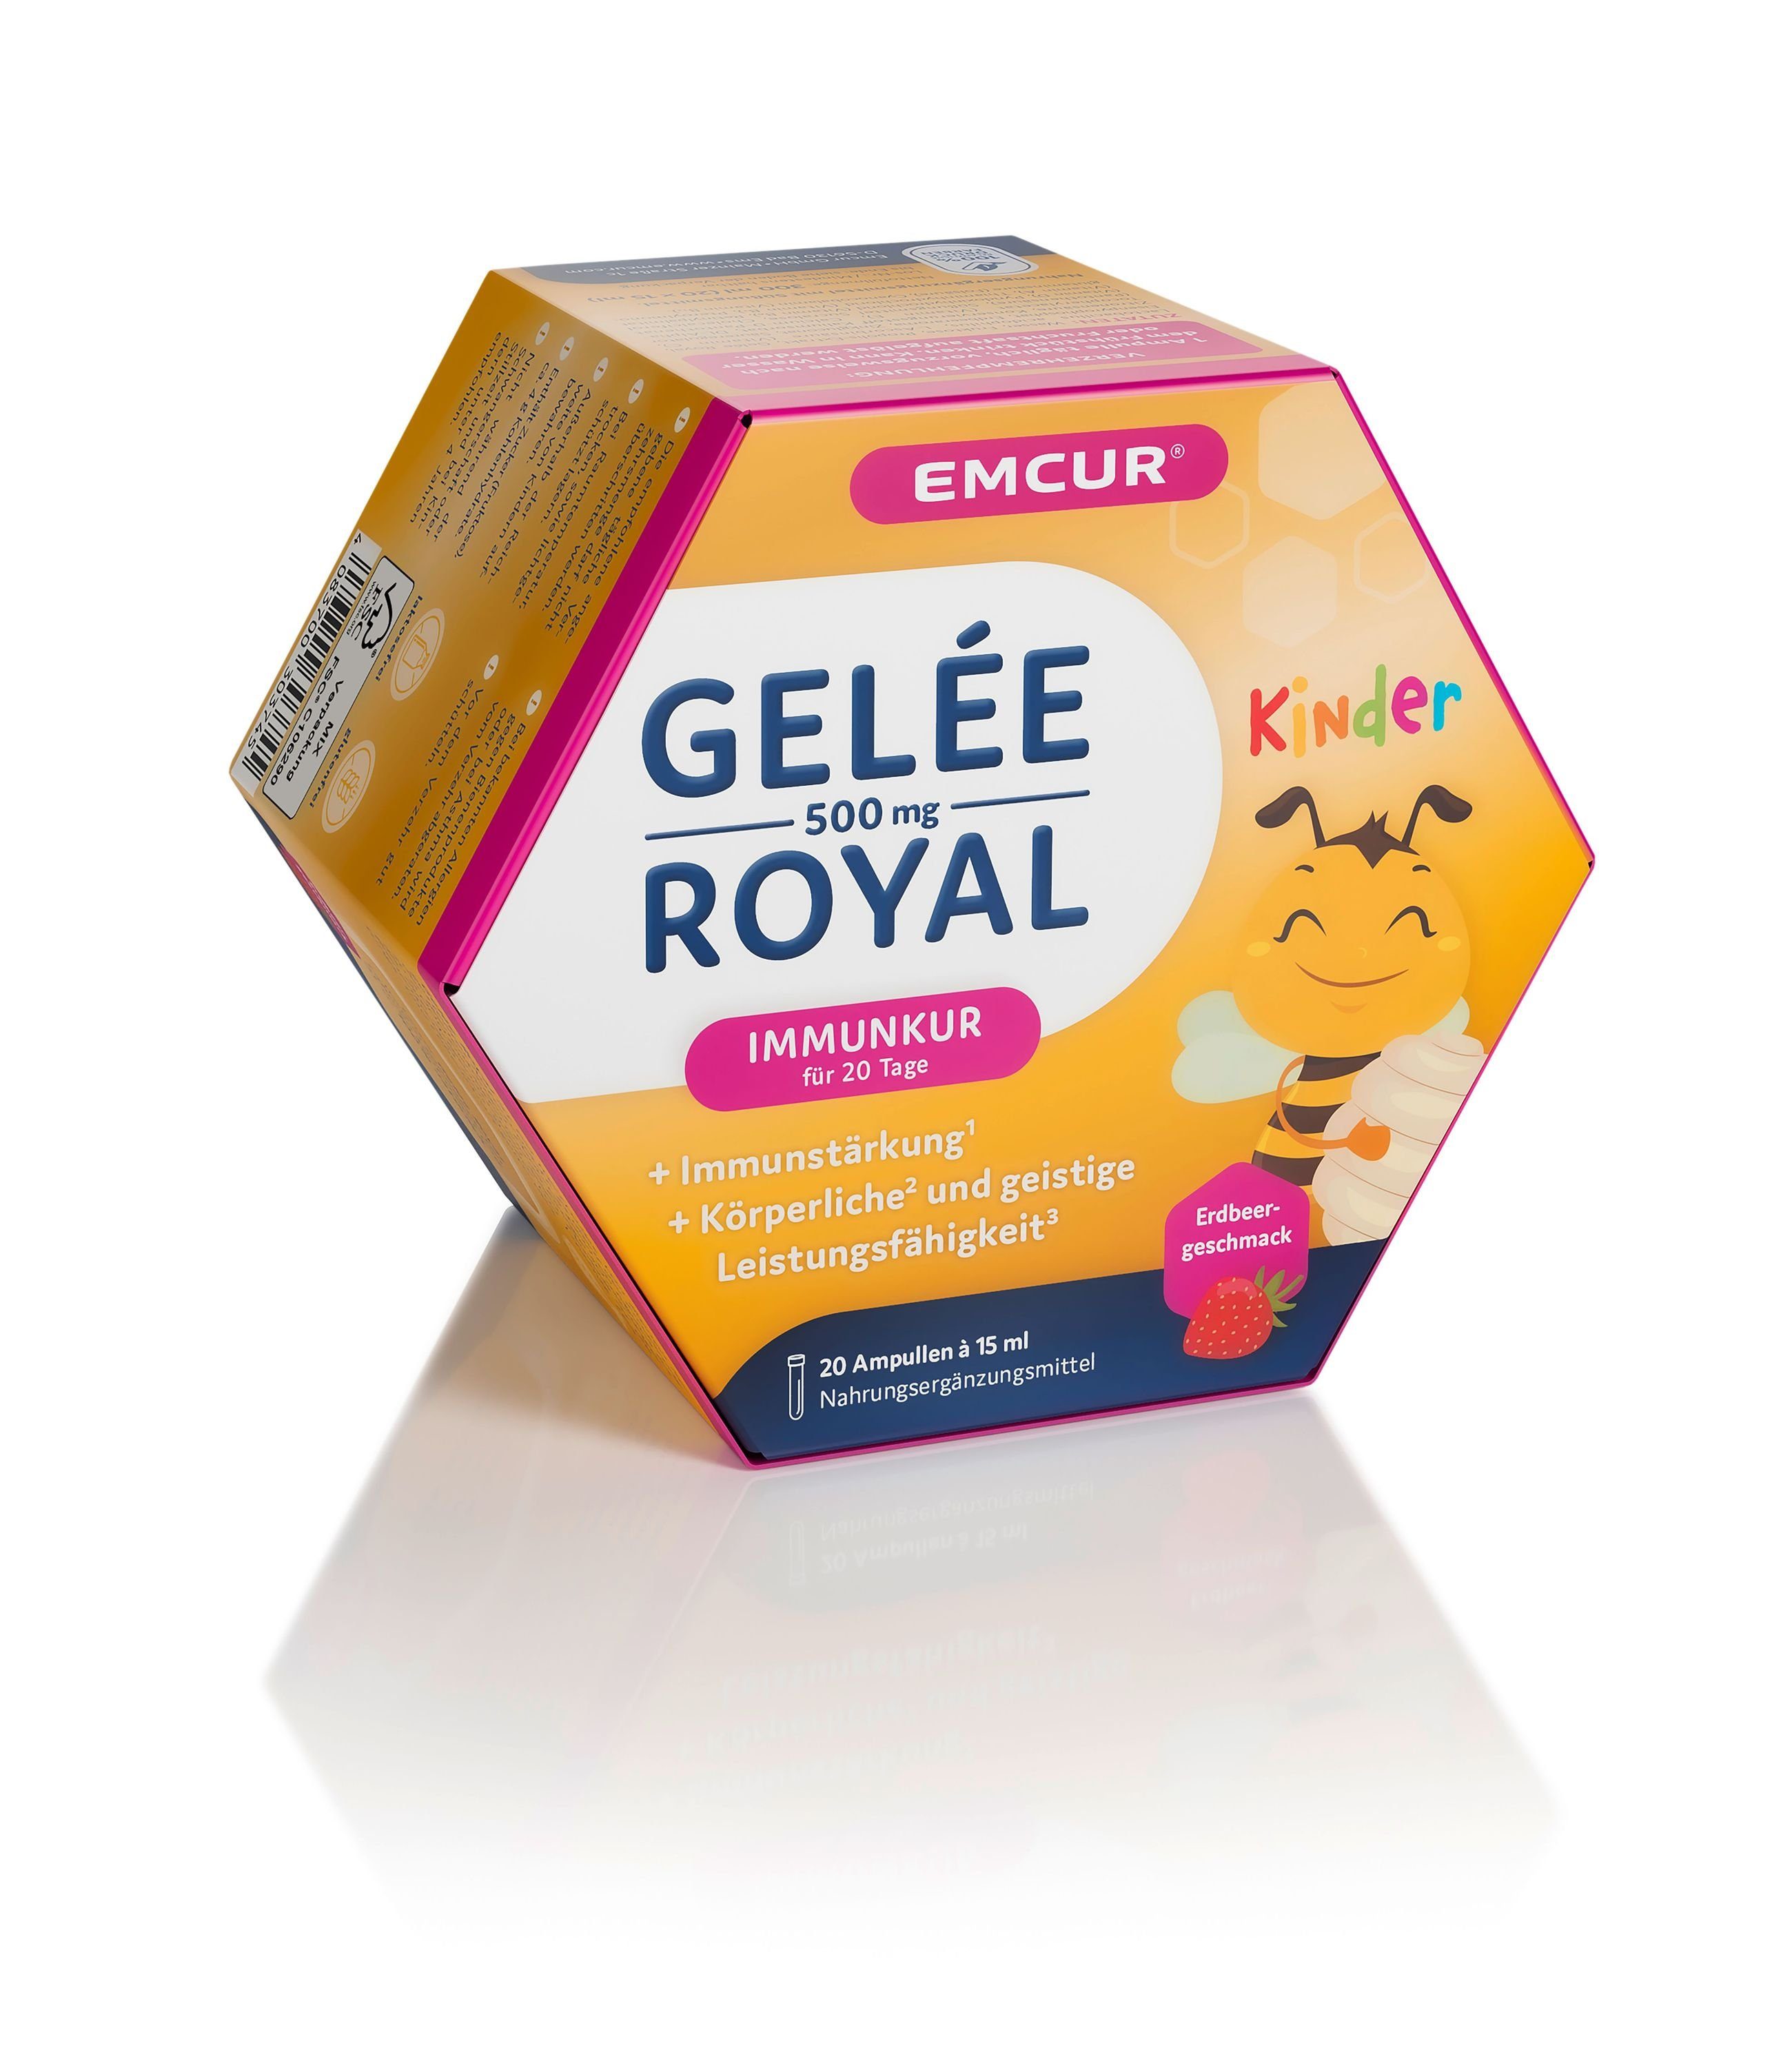 EMCUR Präparat Gelee Royal 500 mg Erdbeere, 20 Ampullen à 15 ml, 20-Tage Kinder Immunkur mit Propolis